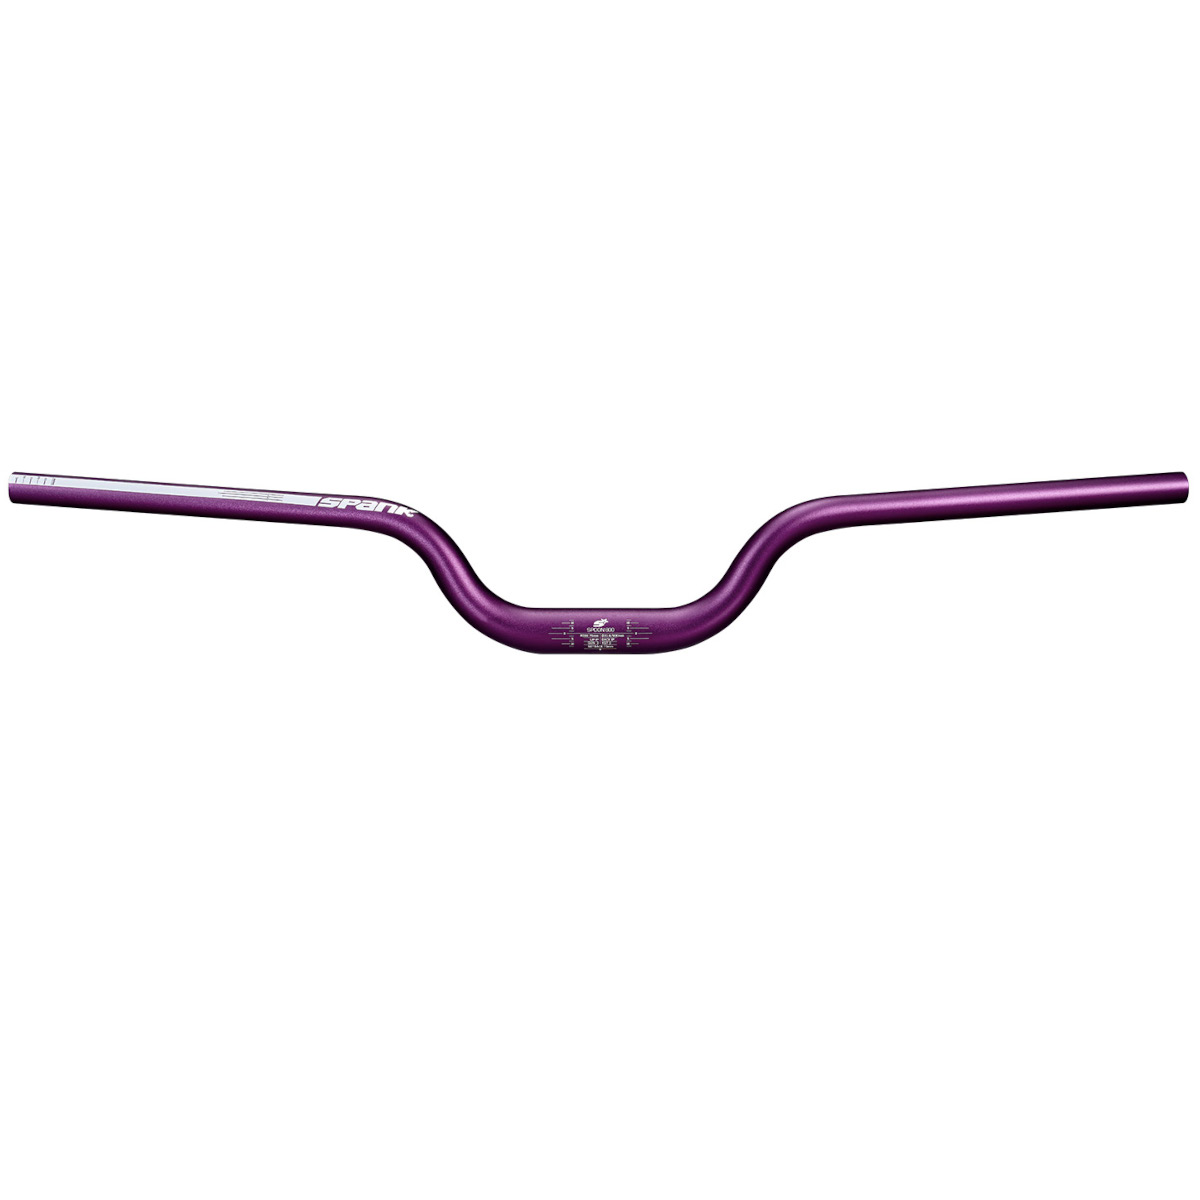 Produktbild von Spank Spoon 800 MTB Lenker - violett